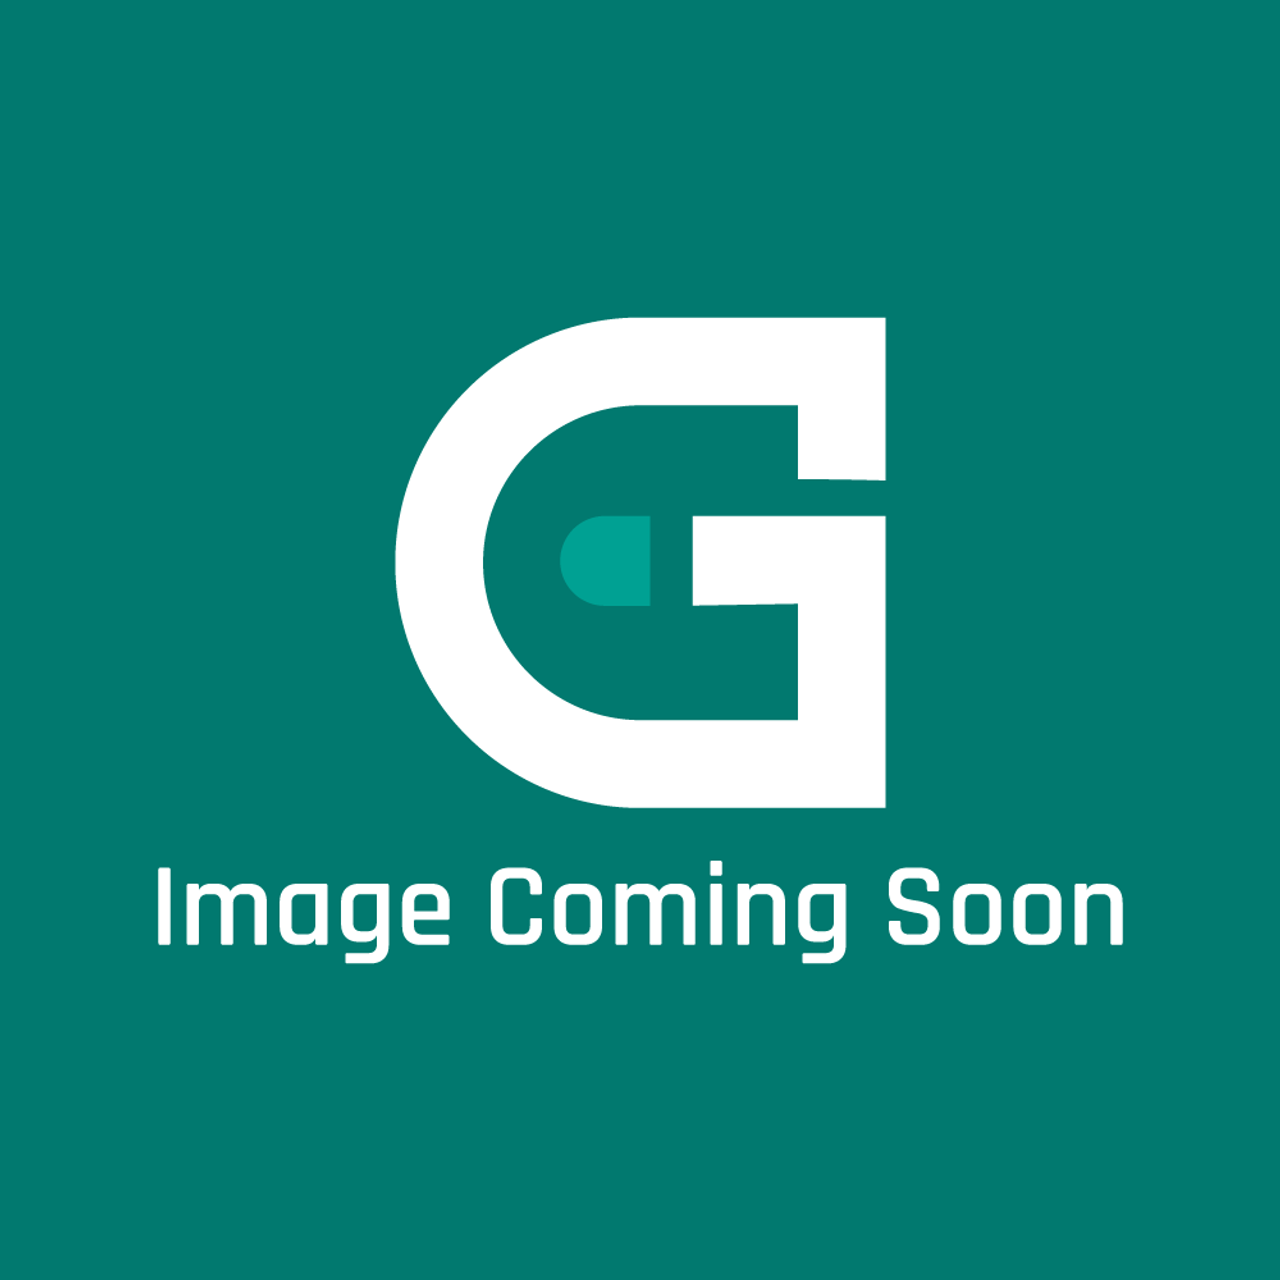 GE Appliances WE01X26575 - Tub Baffle - Image Coming Soon!